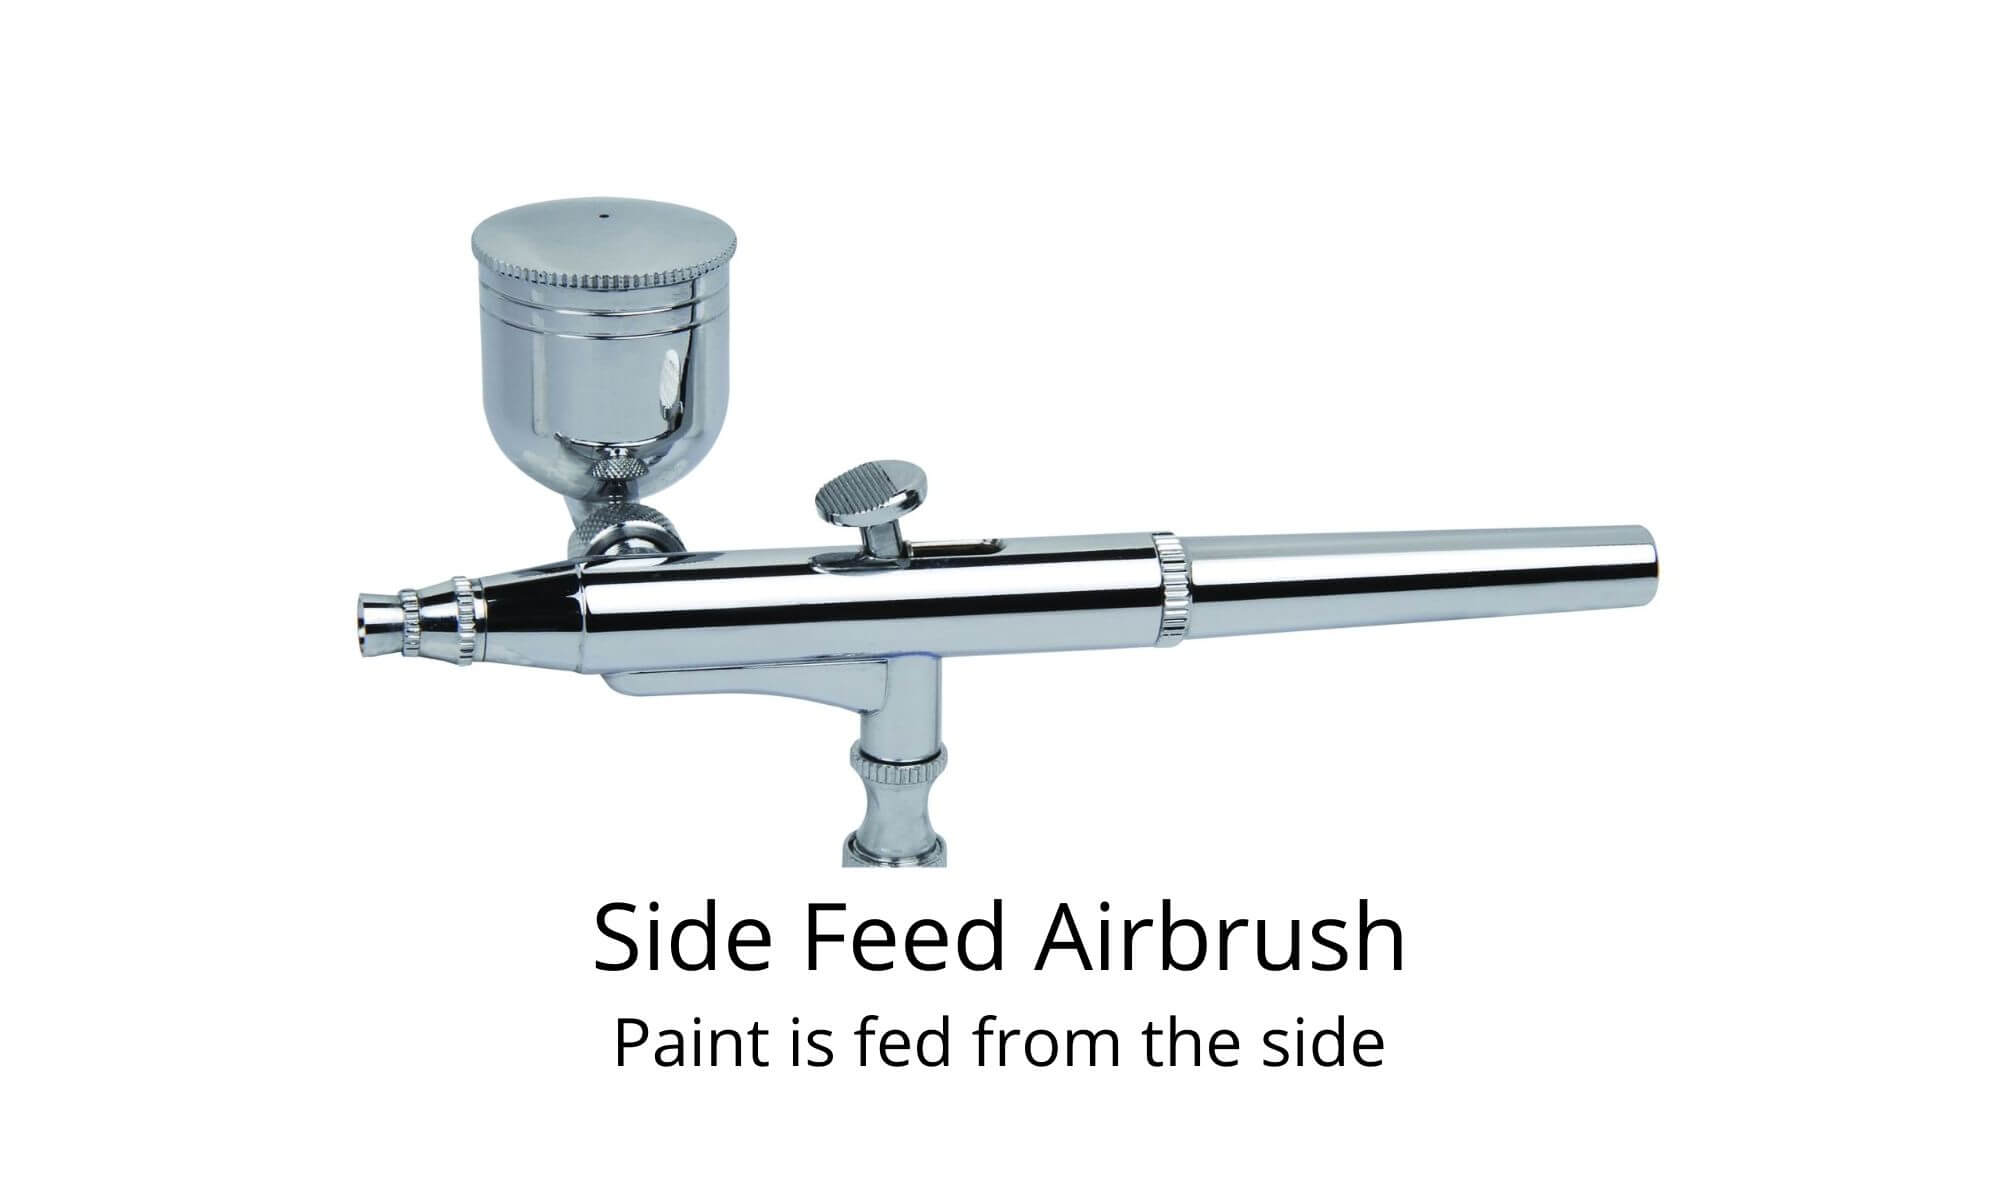 Side feed airbrush